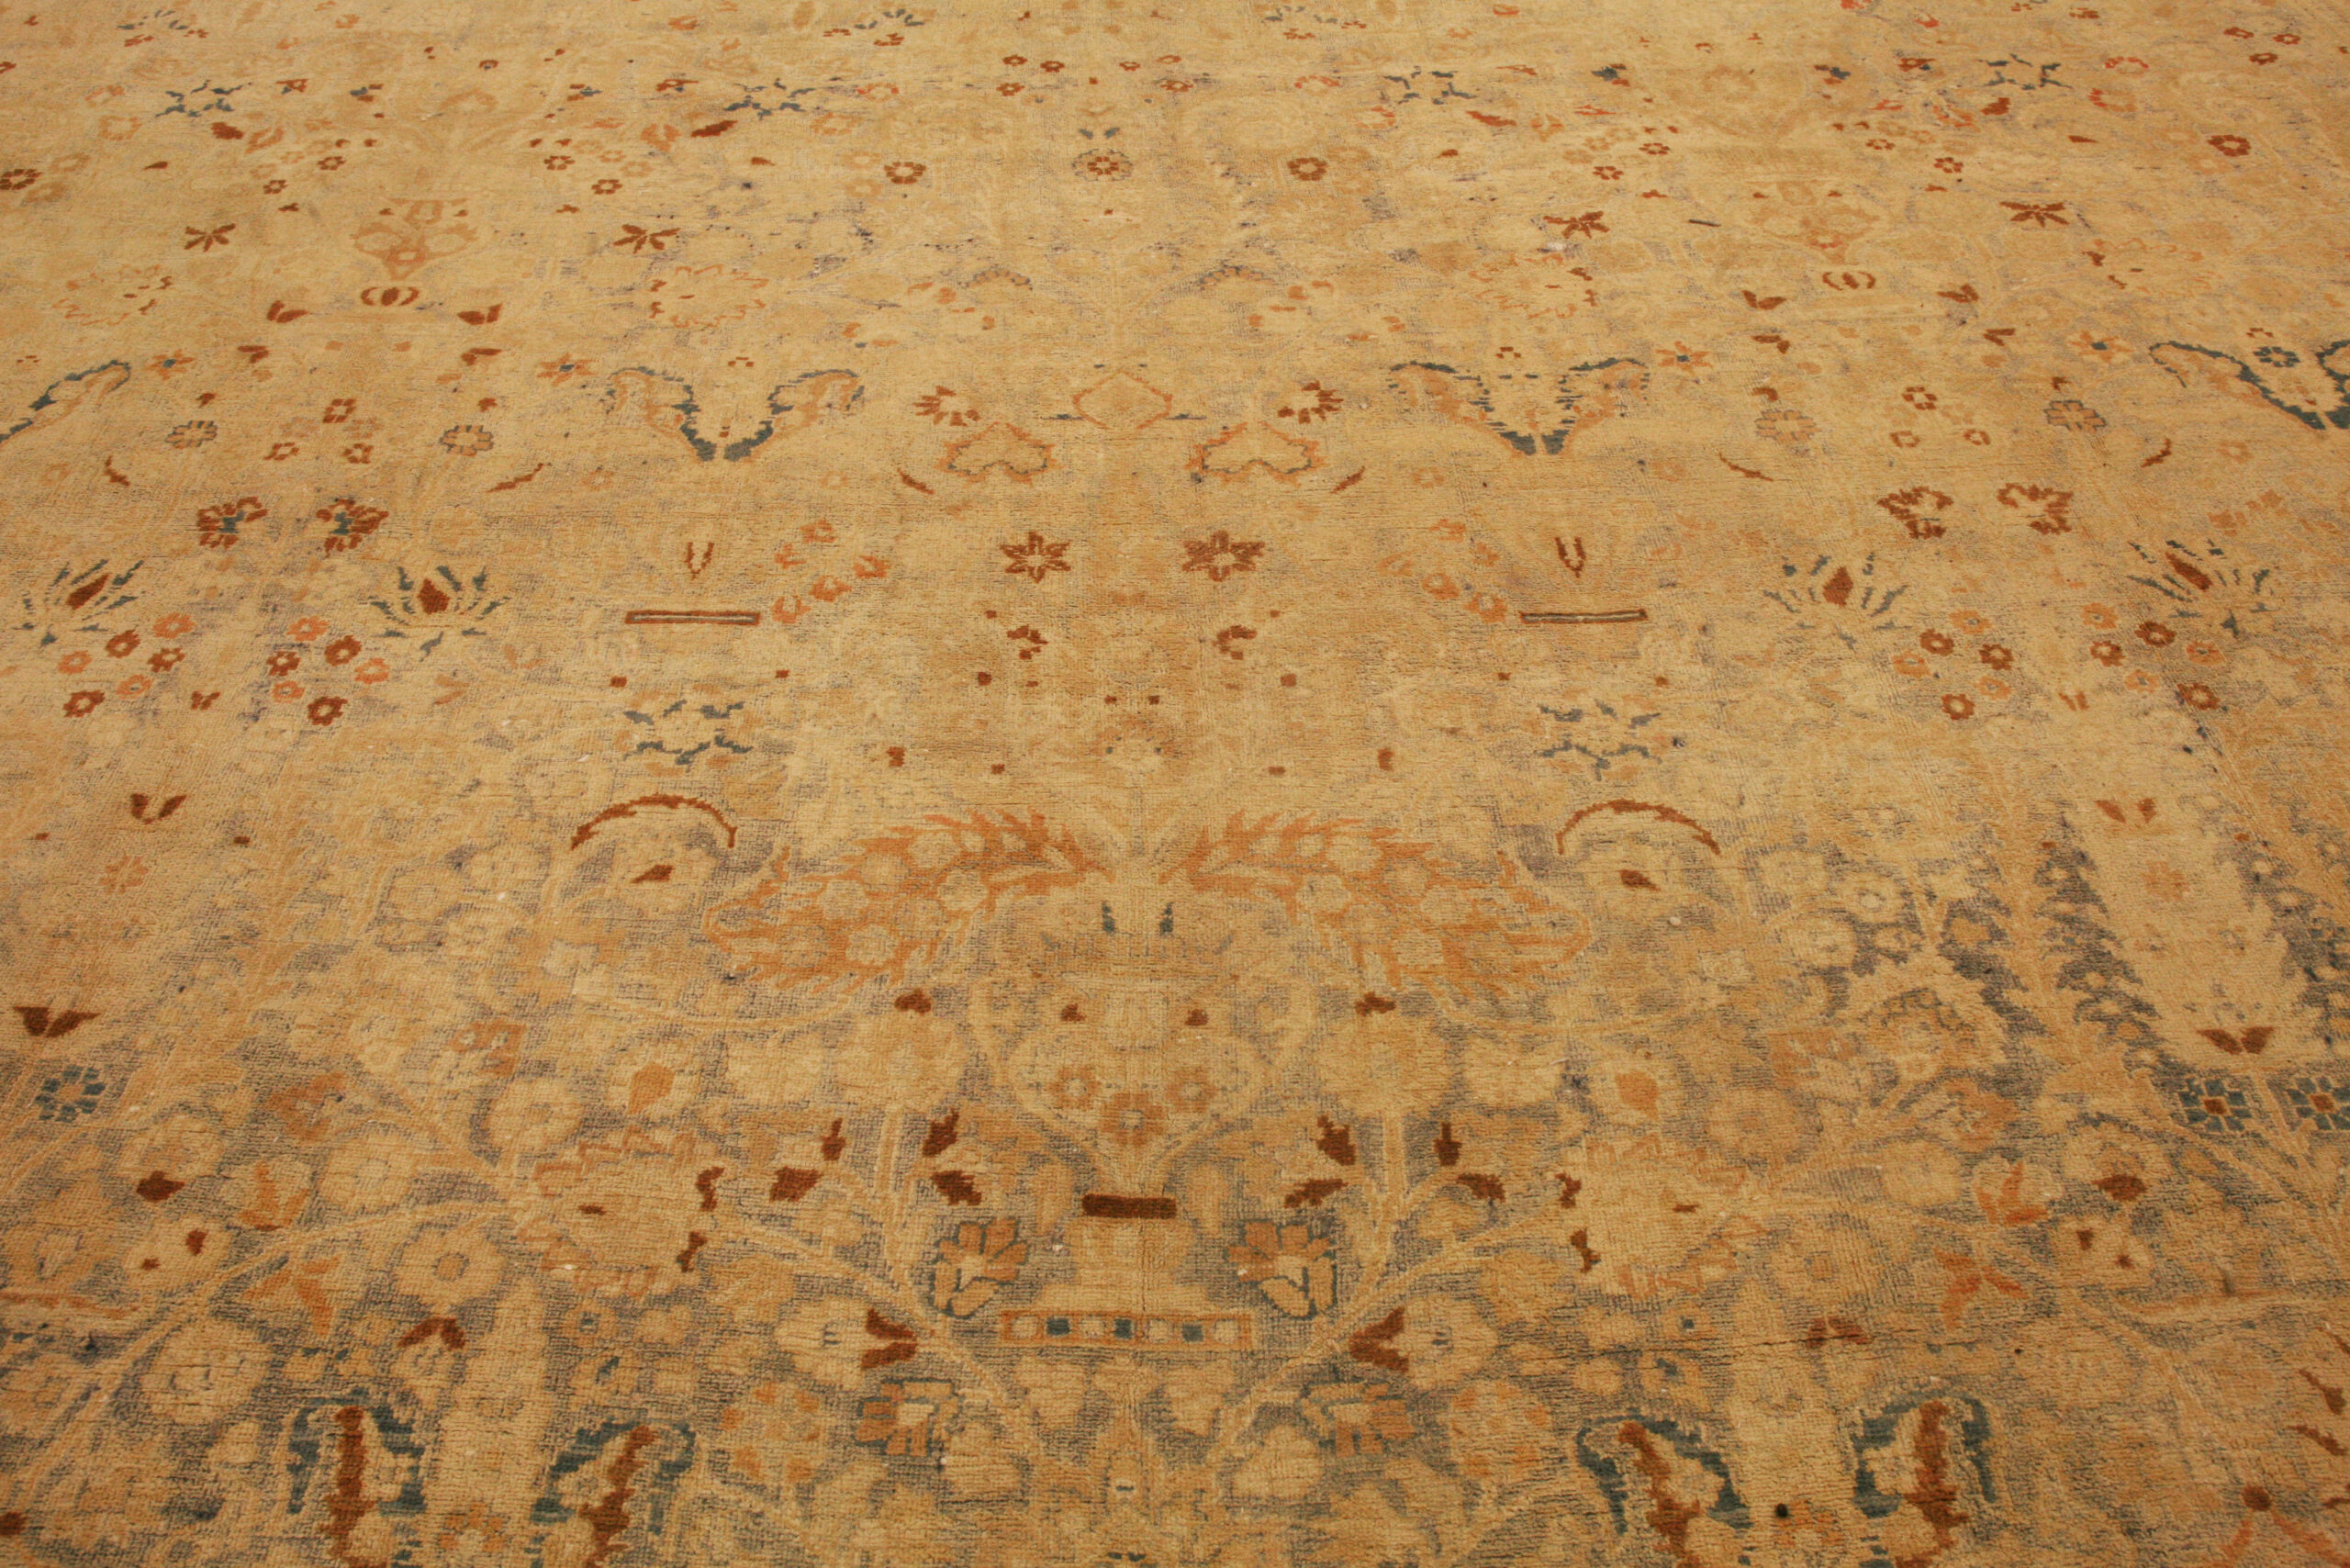 Very Large Antique Mashhad Carpet n°:73156935